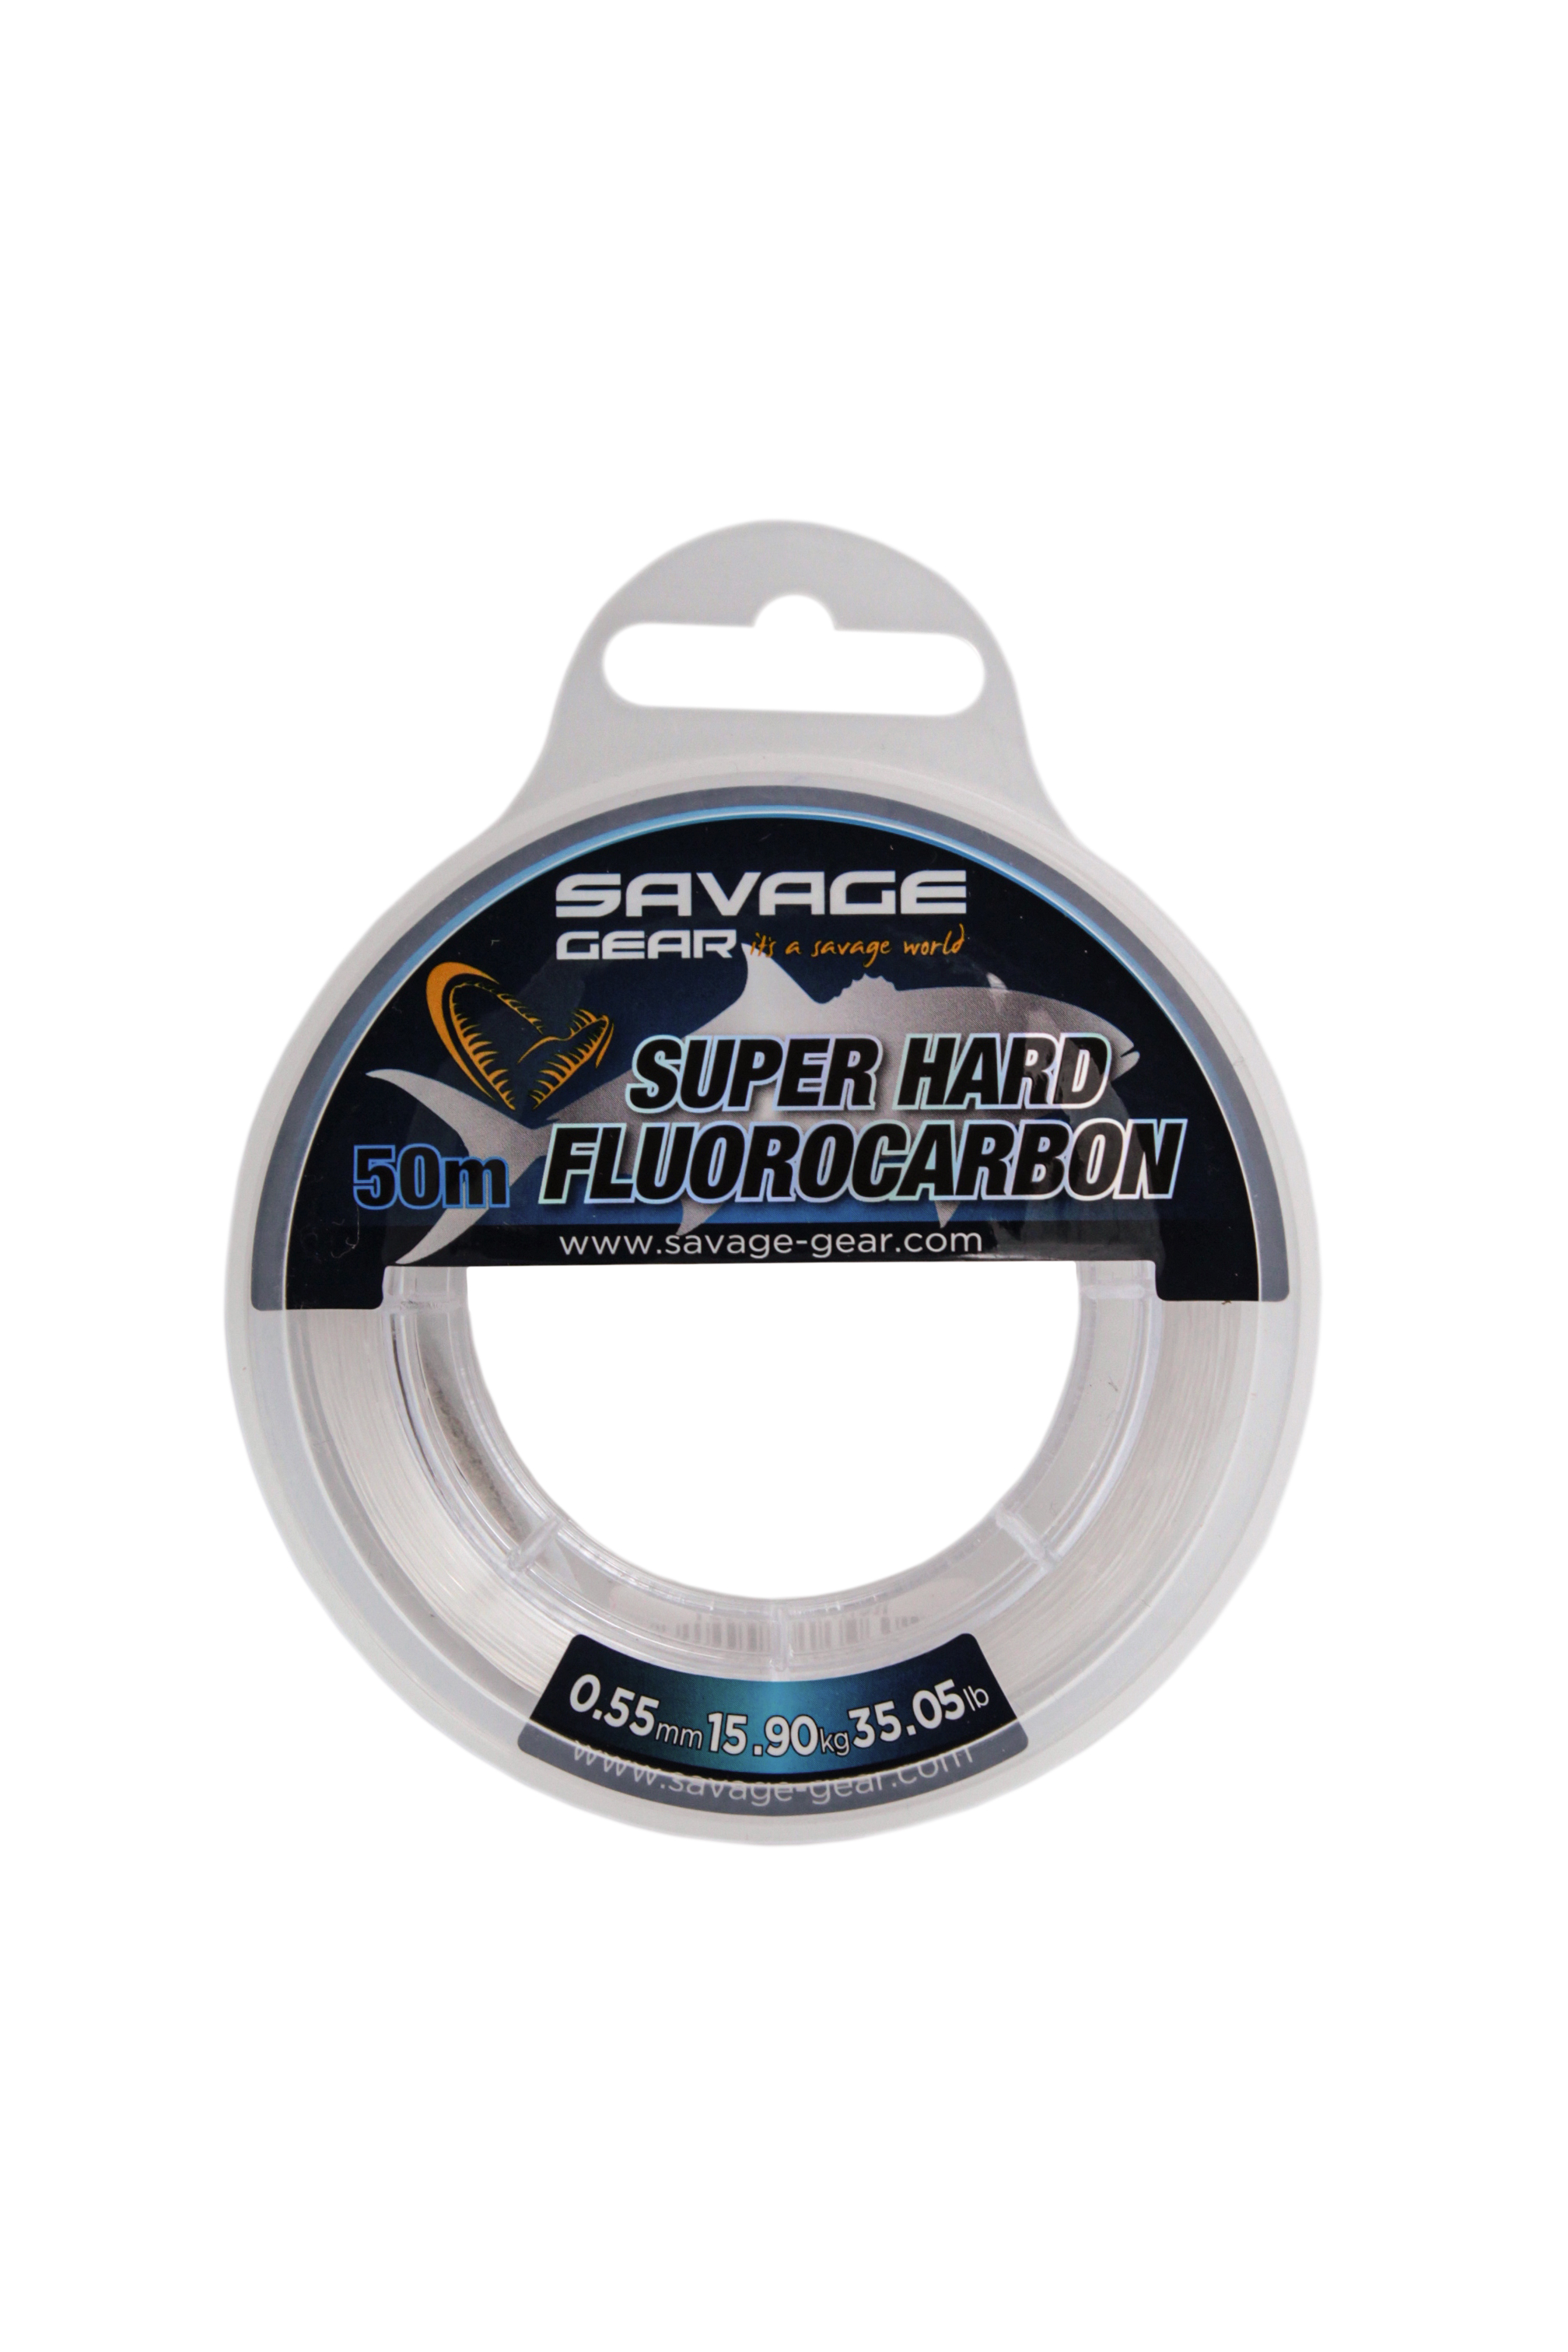 Леска Savage Gear Super hard fluorocarbon 50м 0,55мм 15,9кг 35,05lbs clear - фото 1